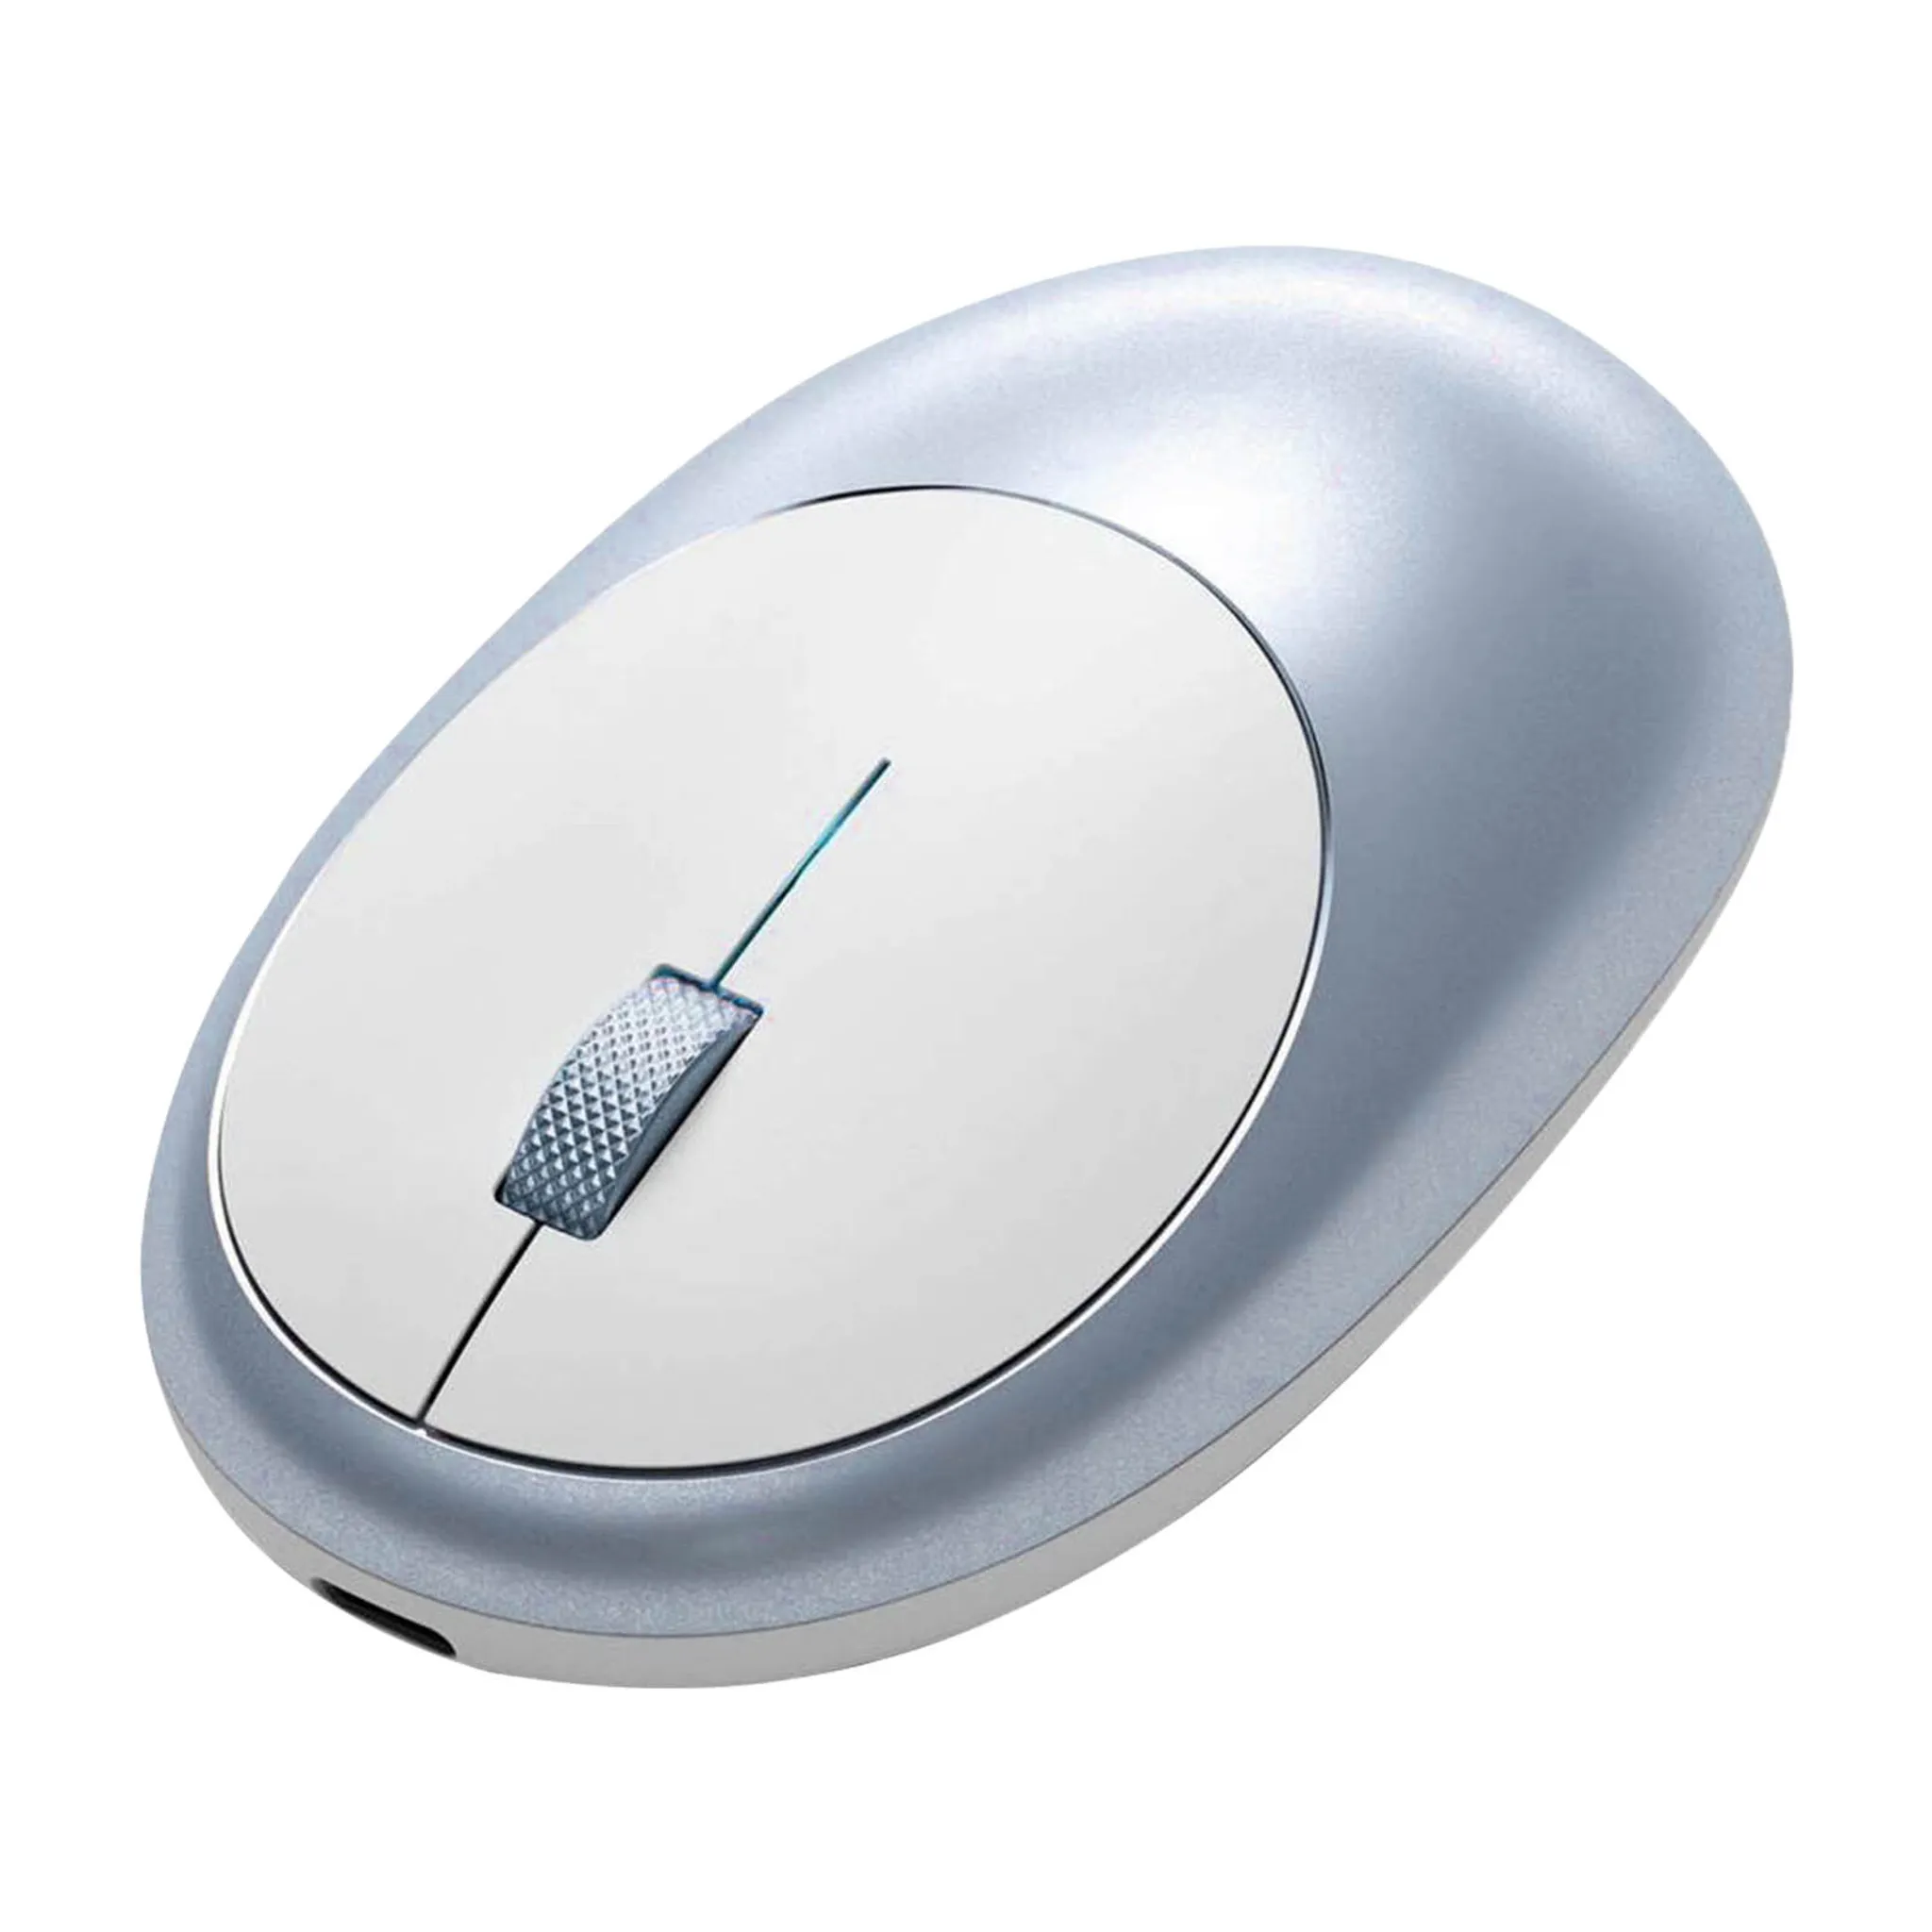 Wireless Bluetooth Blau Mouse M1 Satechi -